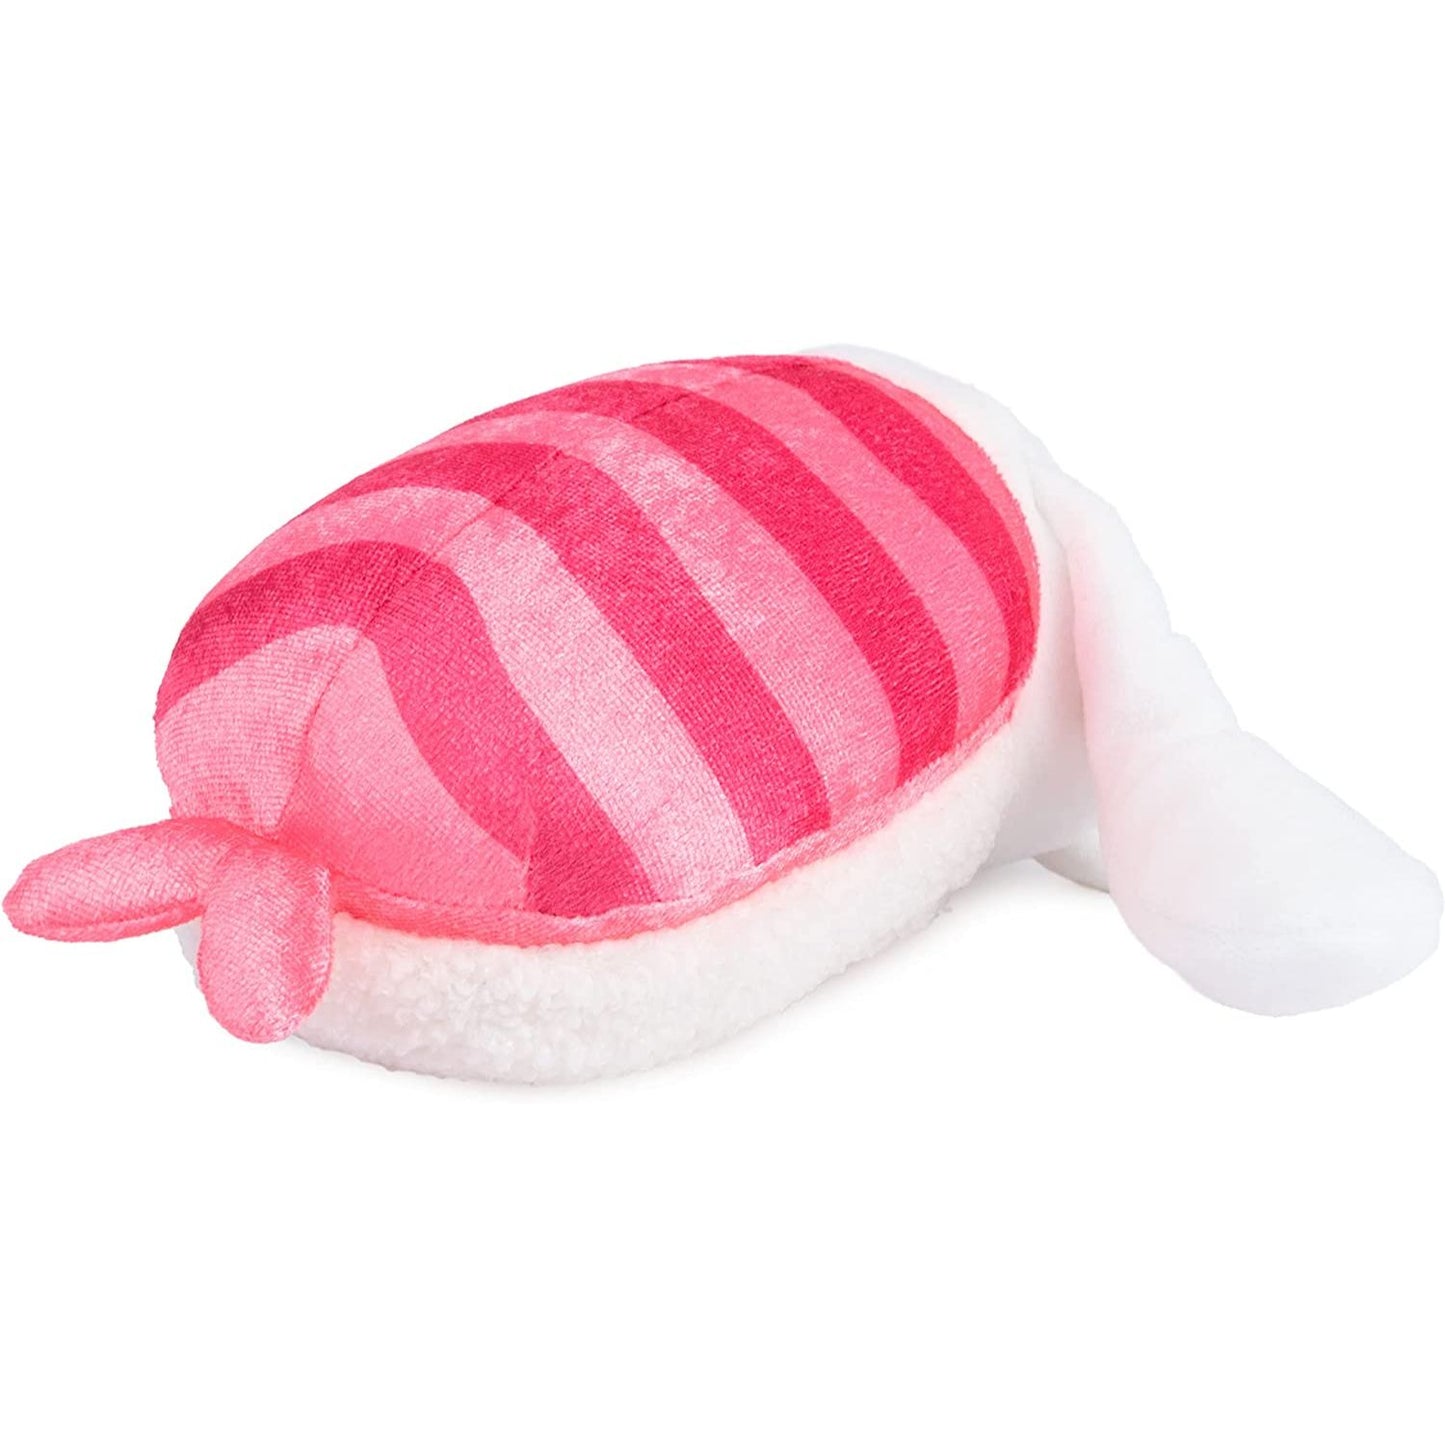 Sanrio Cinnamoroll Sashimi Plush, Premium Stuffed Animal for Ages 1 and Up, Pink/White, 6”